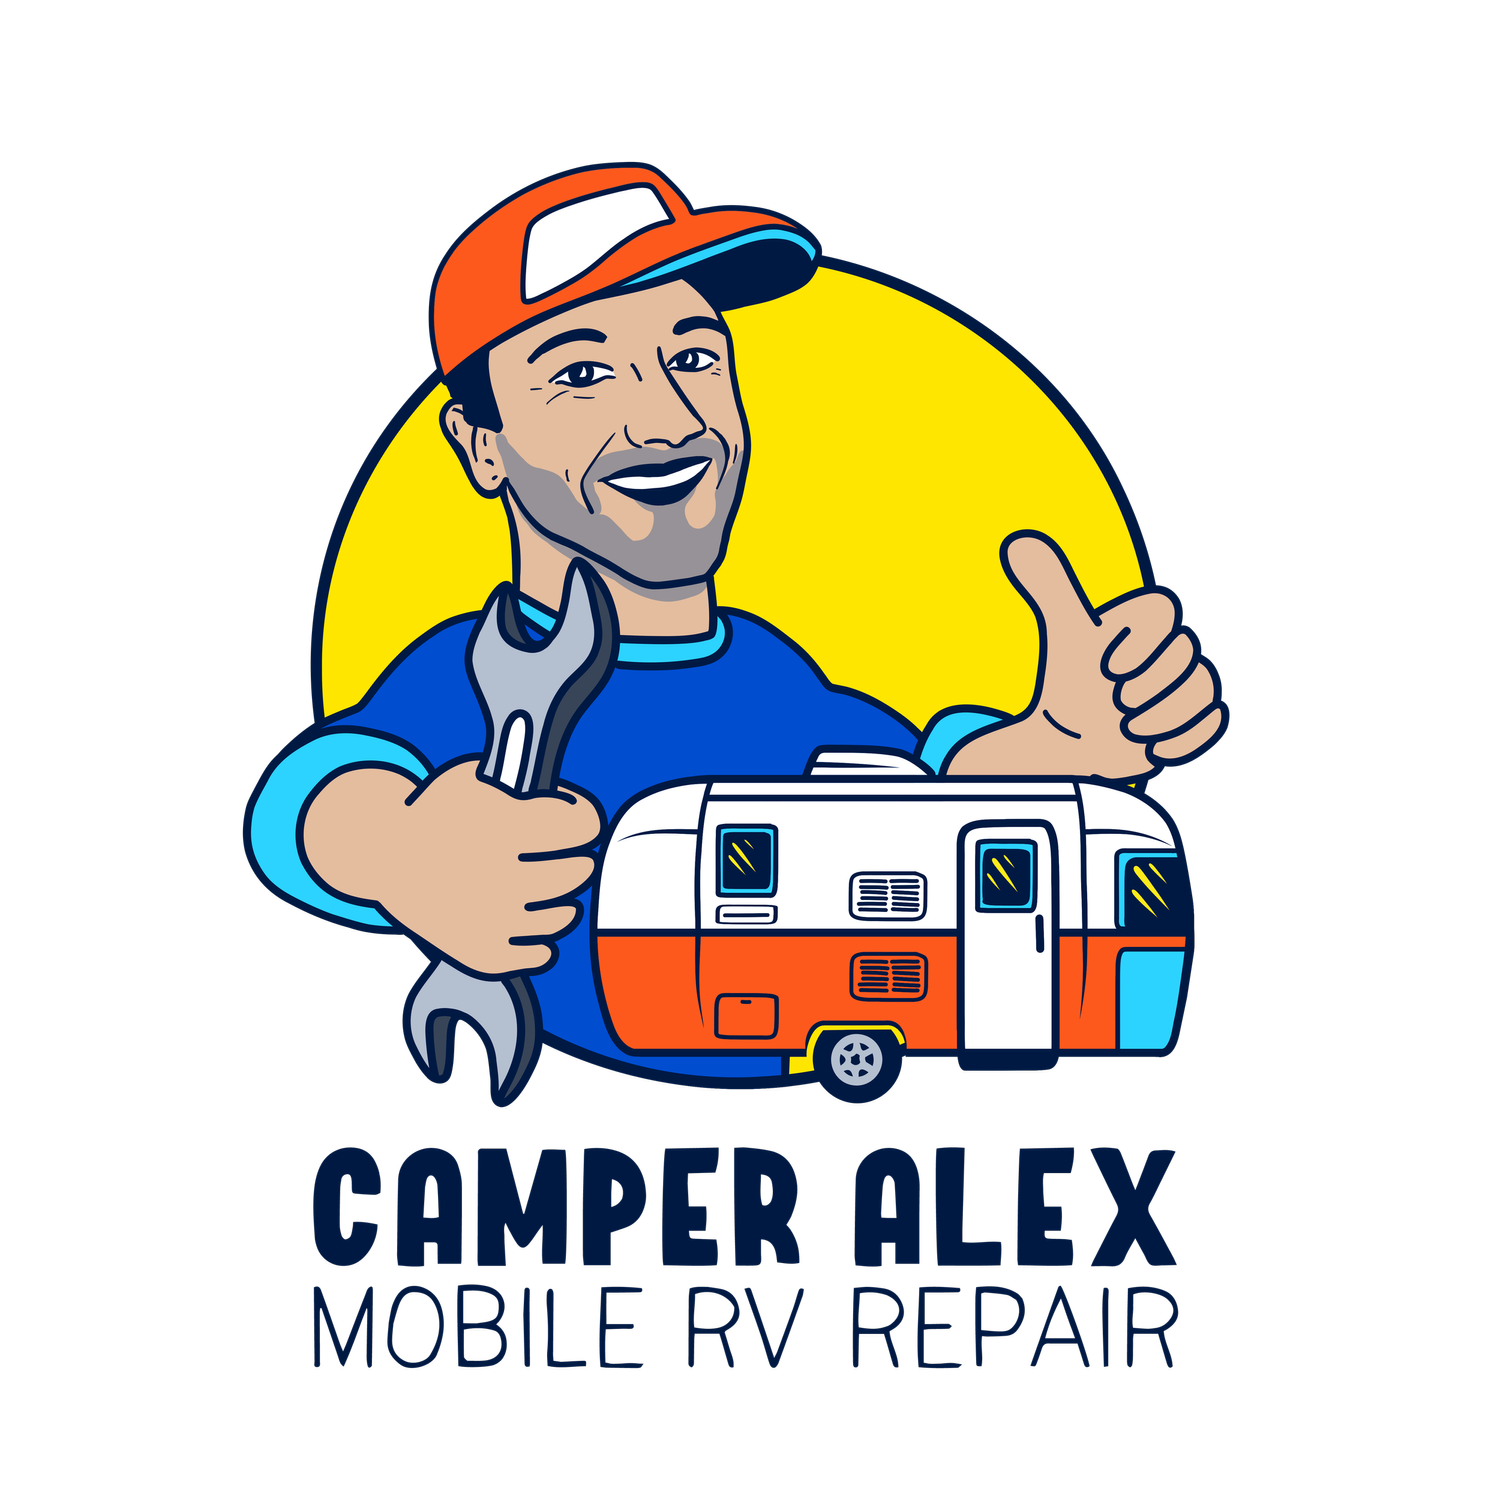 Camper Alex Mobile RV Repair Austin Texas